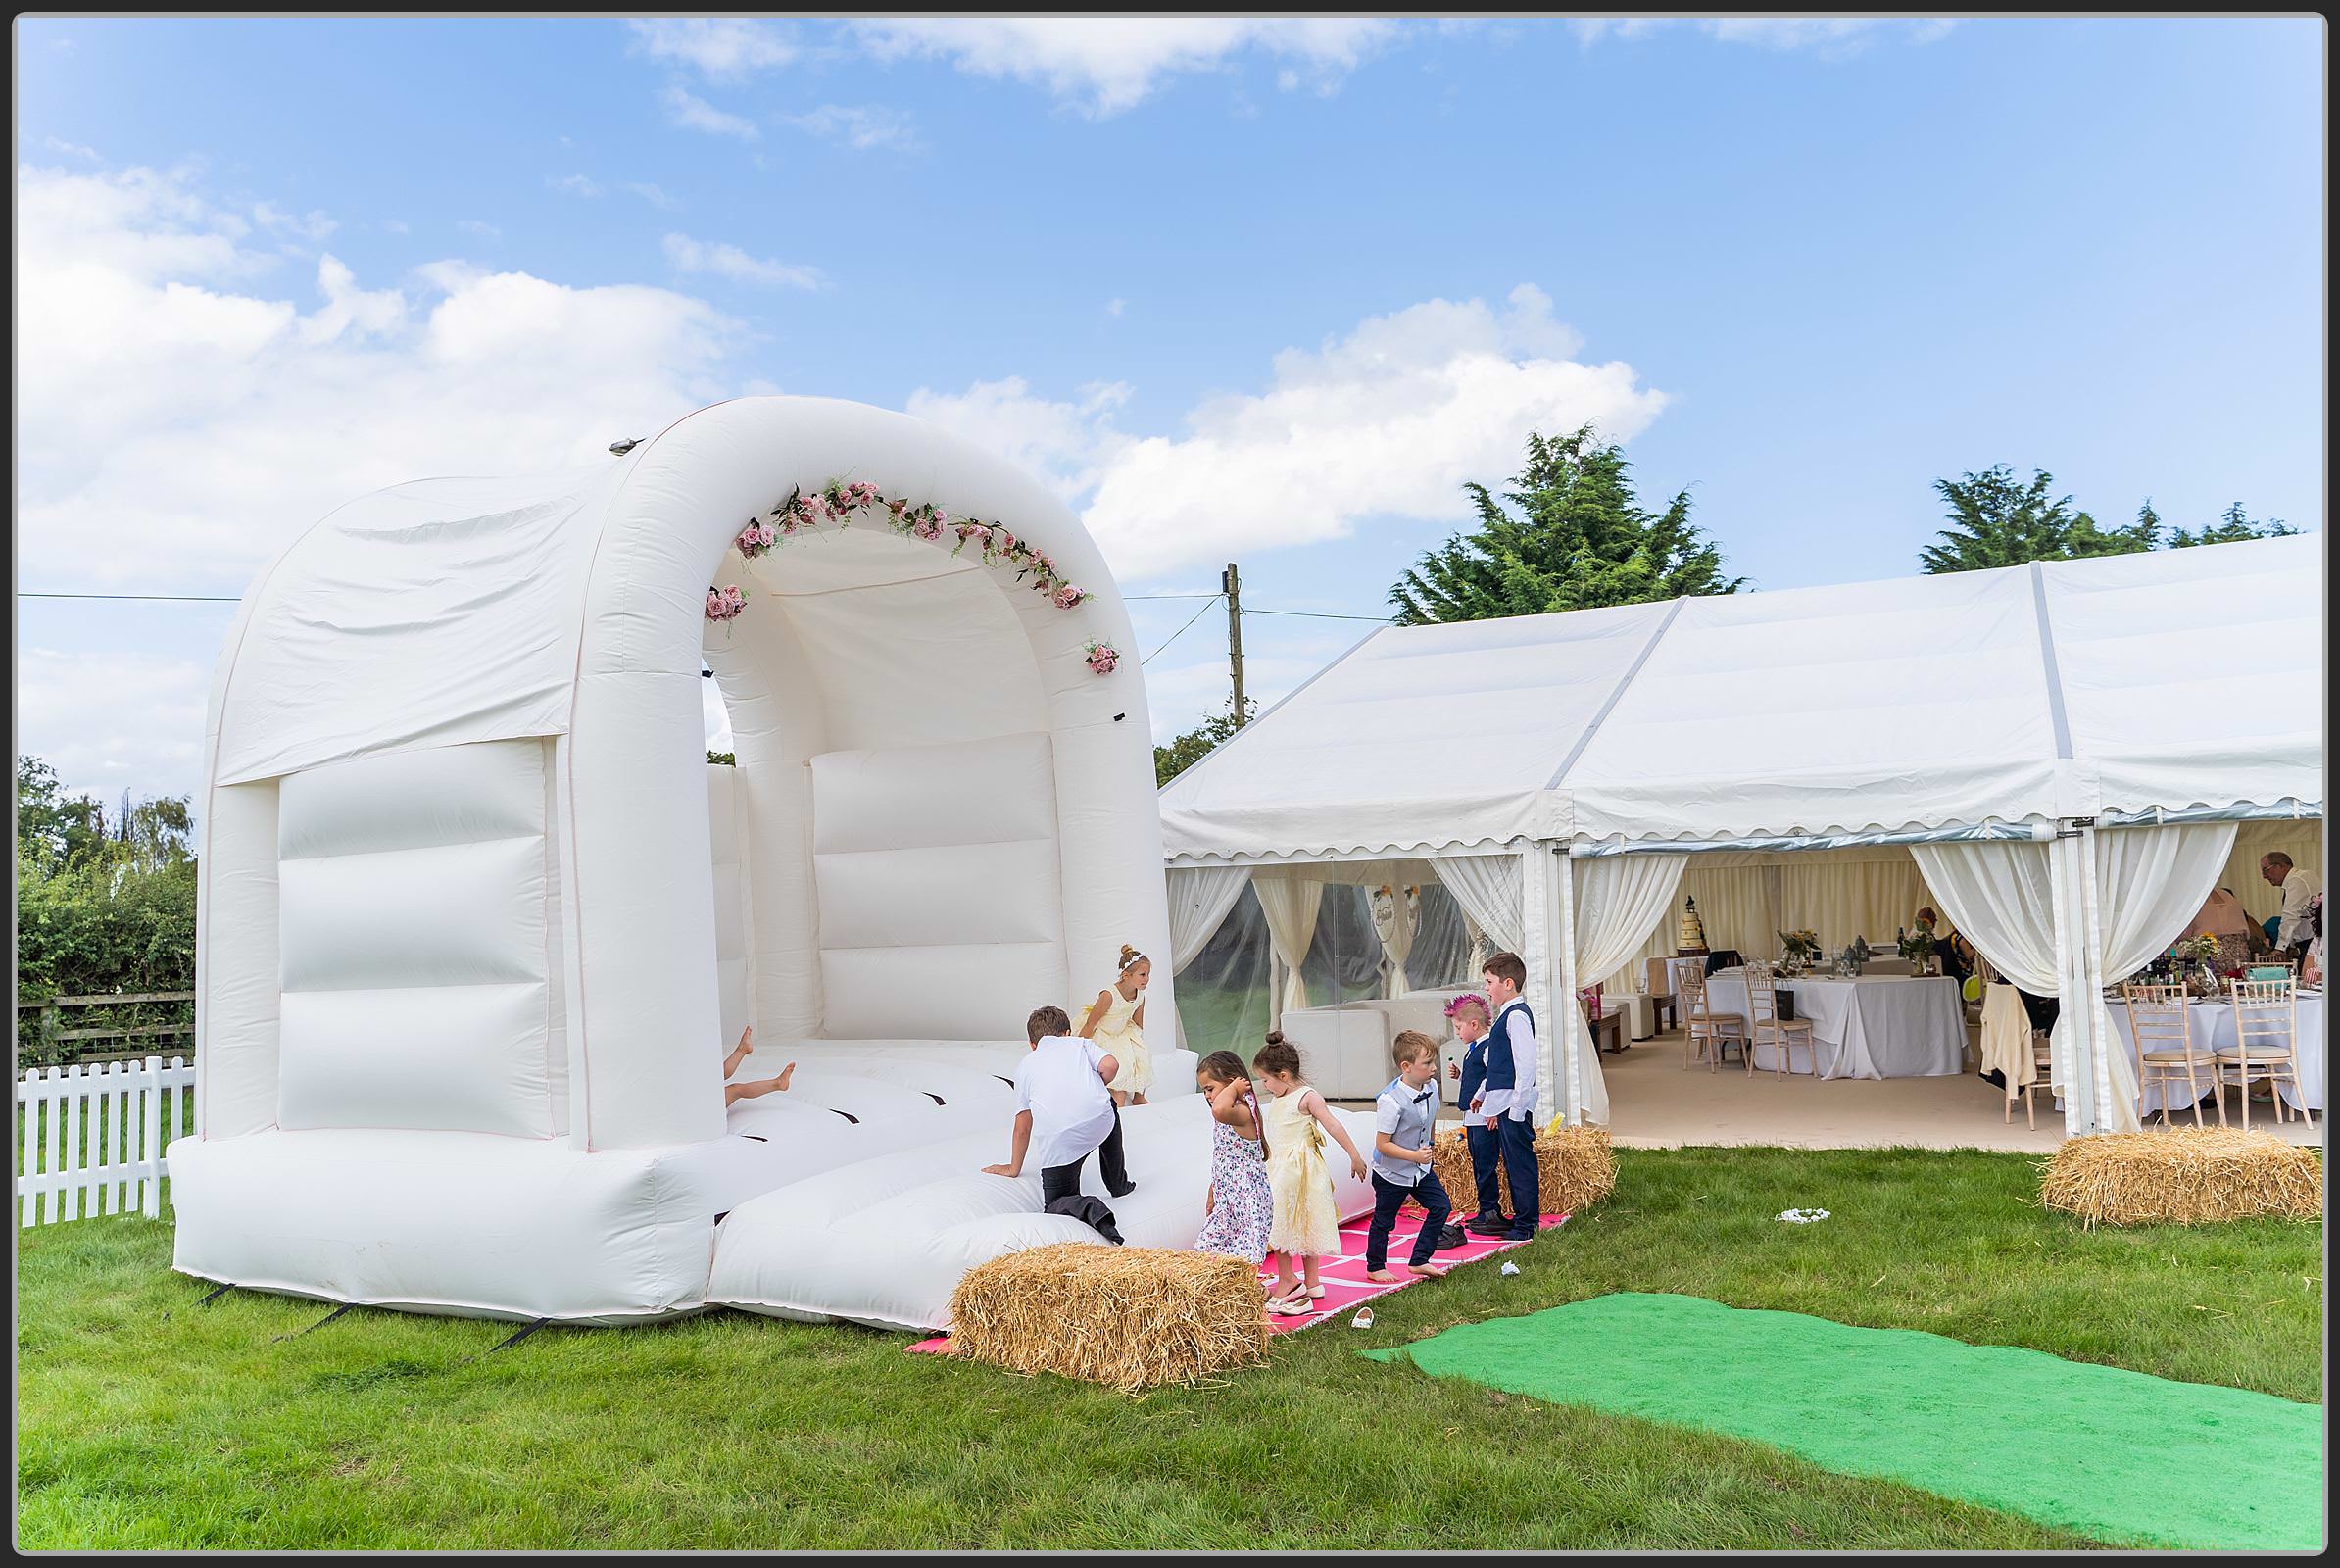 The wedding bouncy castle